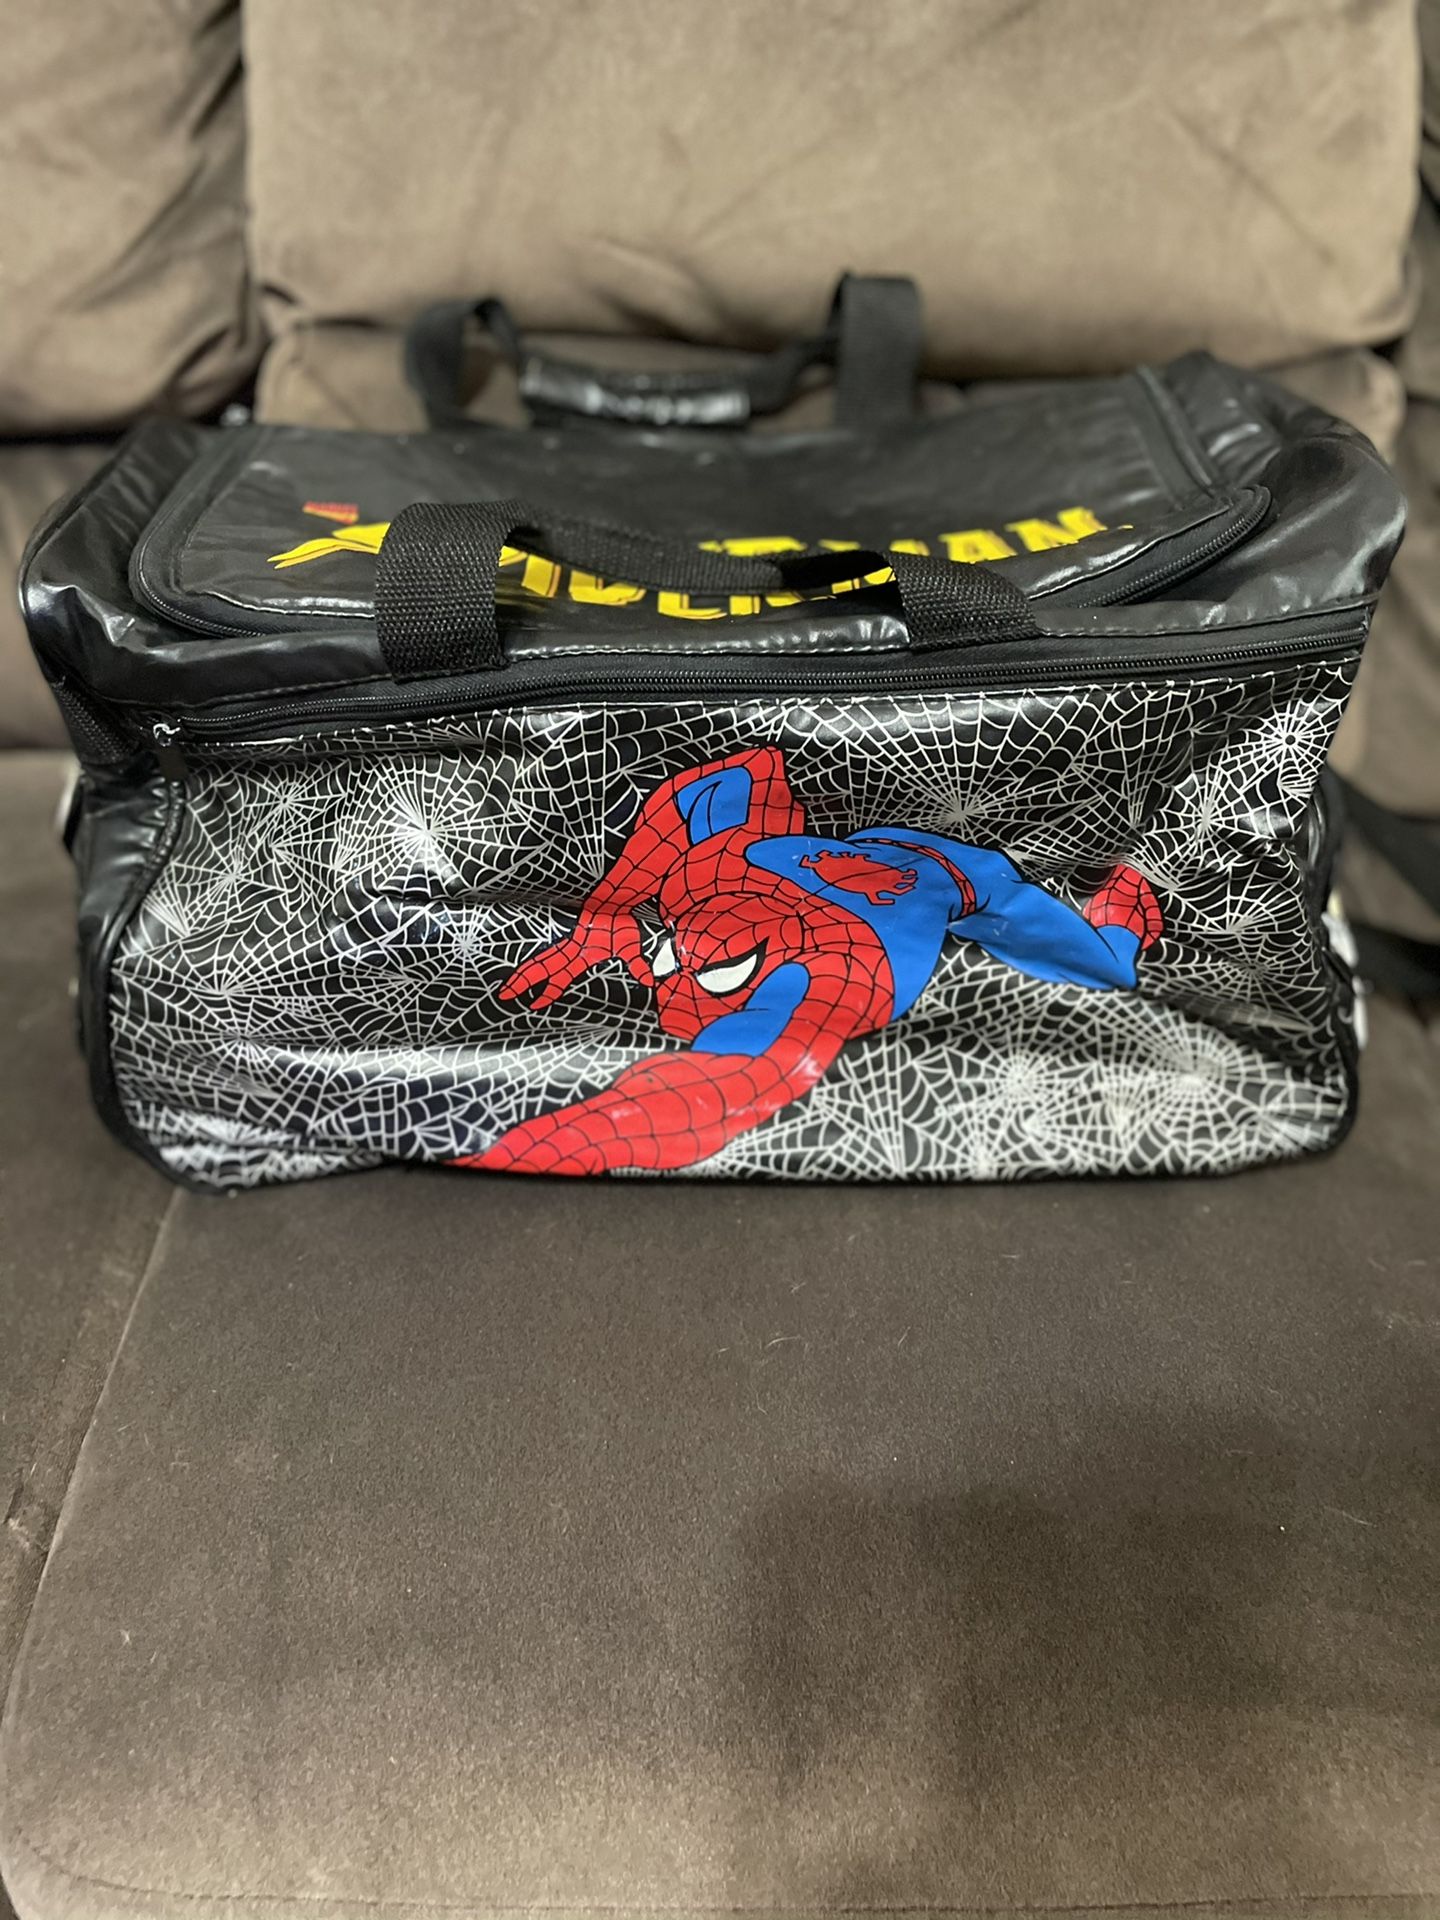 Spider-Man duffle bag